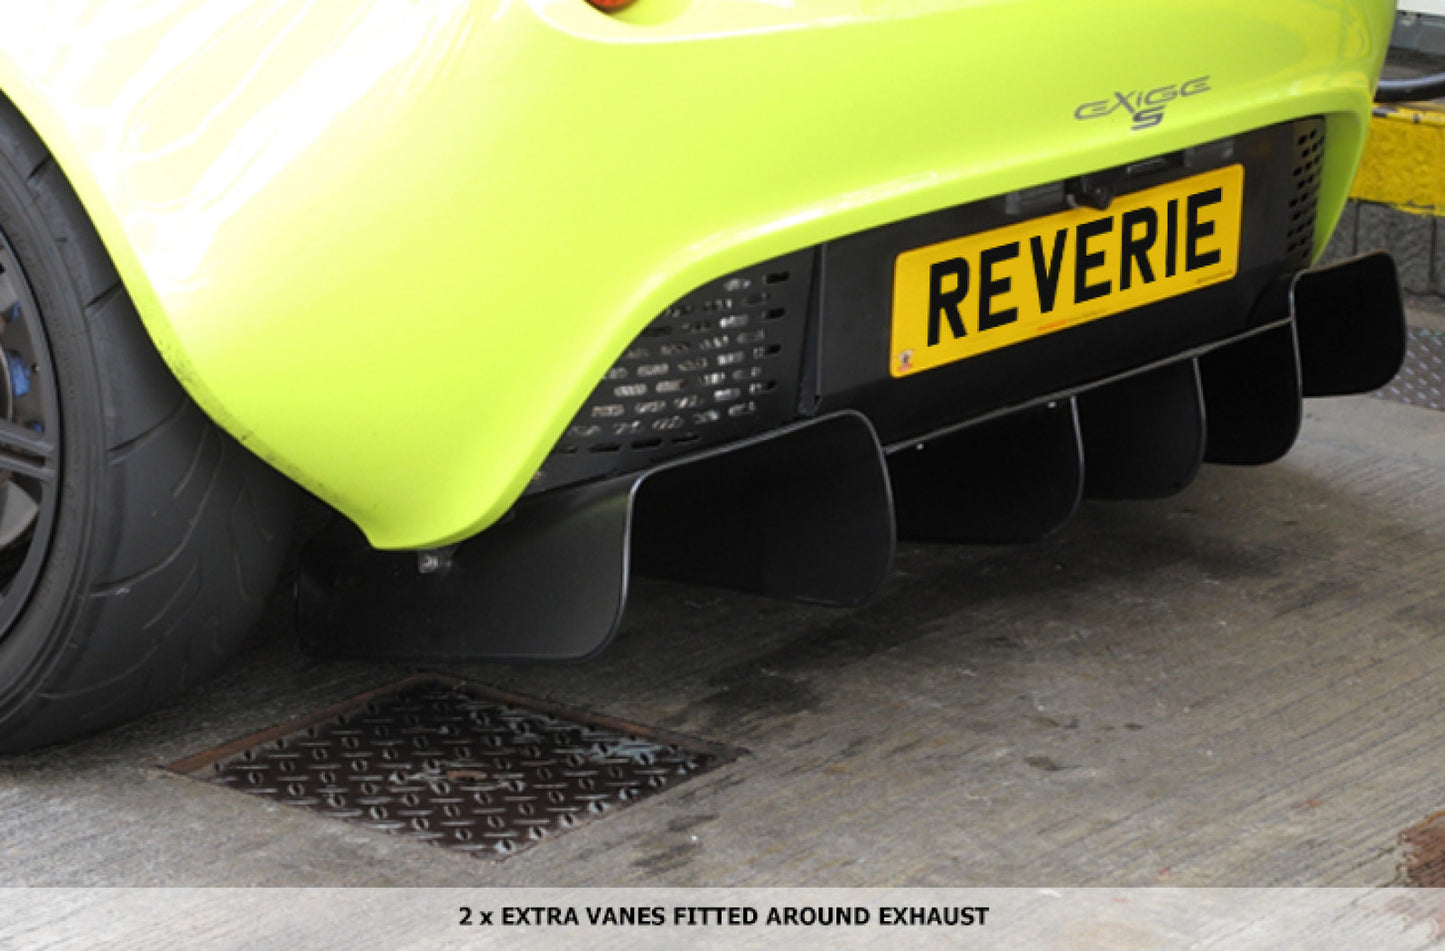 Reverie Lotus Elise/Exige S2/111R/240R Carbon Rear Diffuser - 3 Element, 3 Fixing Holes Standard Finish R01SB0092